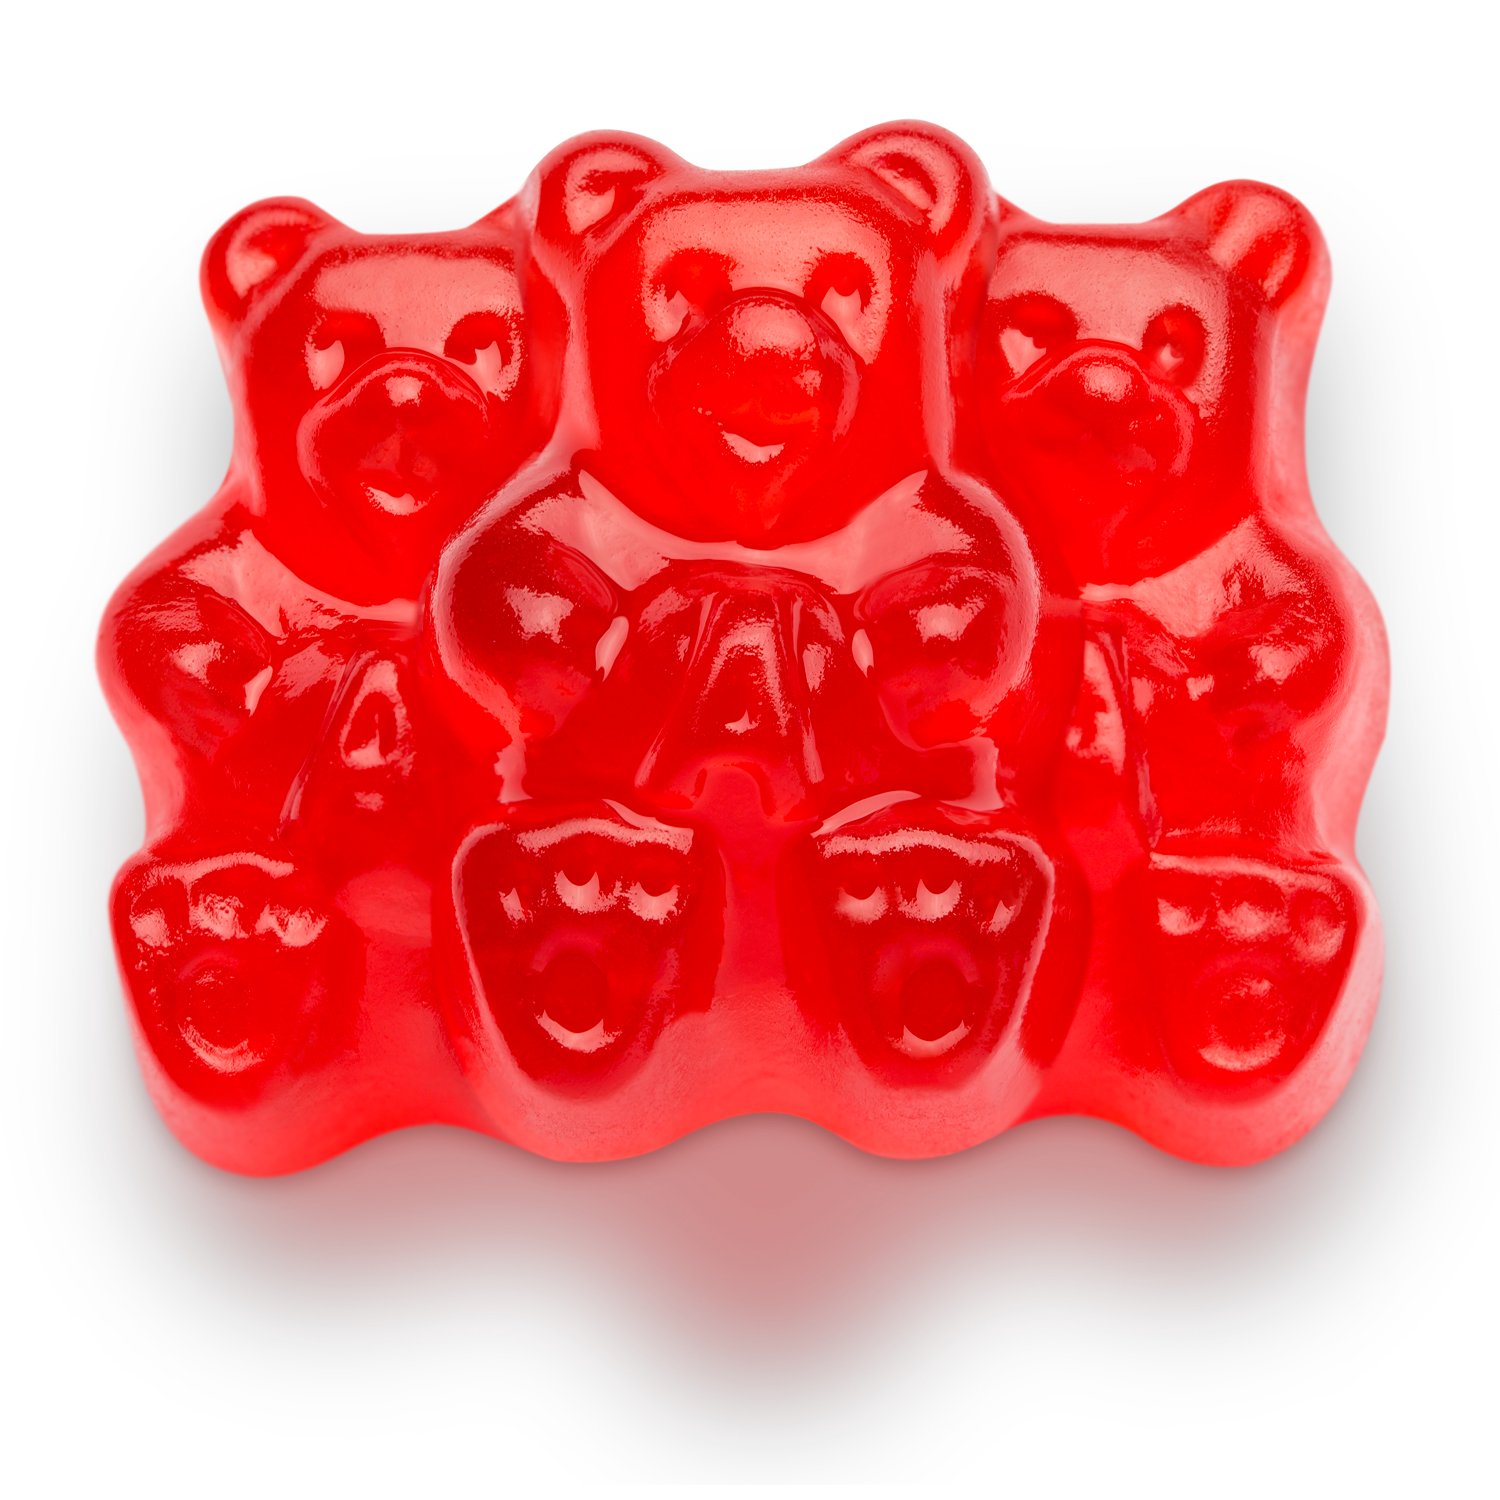 Wild Cherry Gummi Bears | Individual Flavors | World's Best Gummies ...